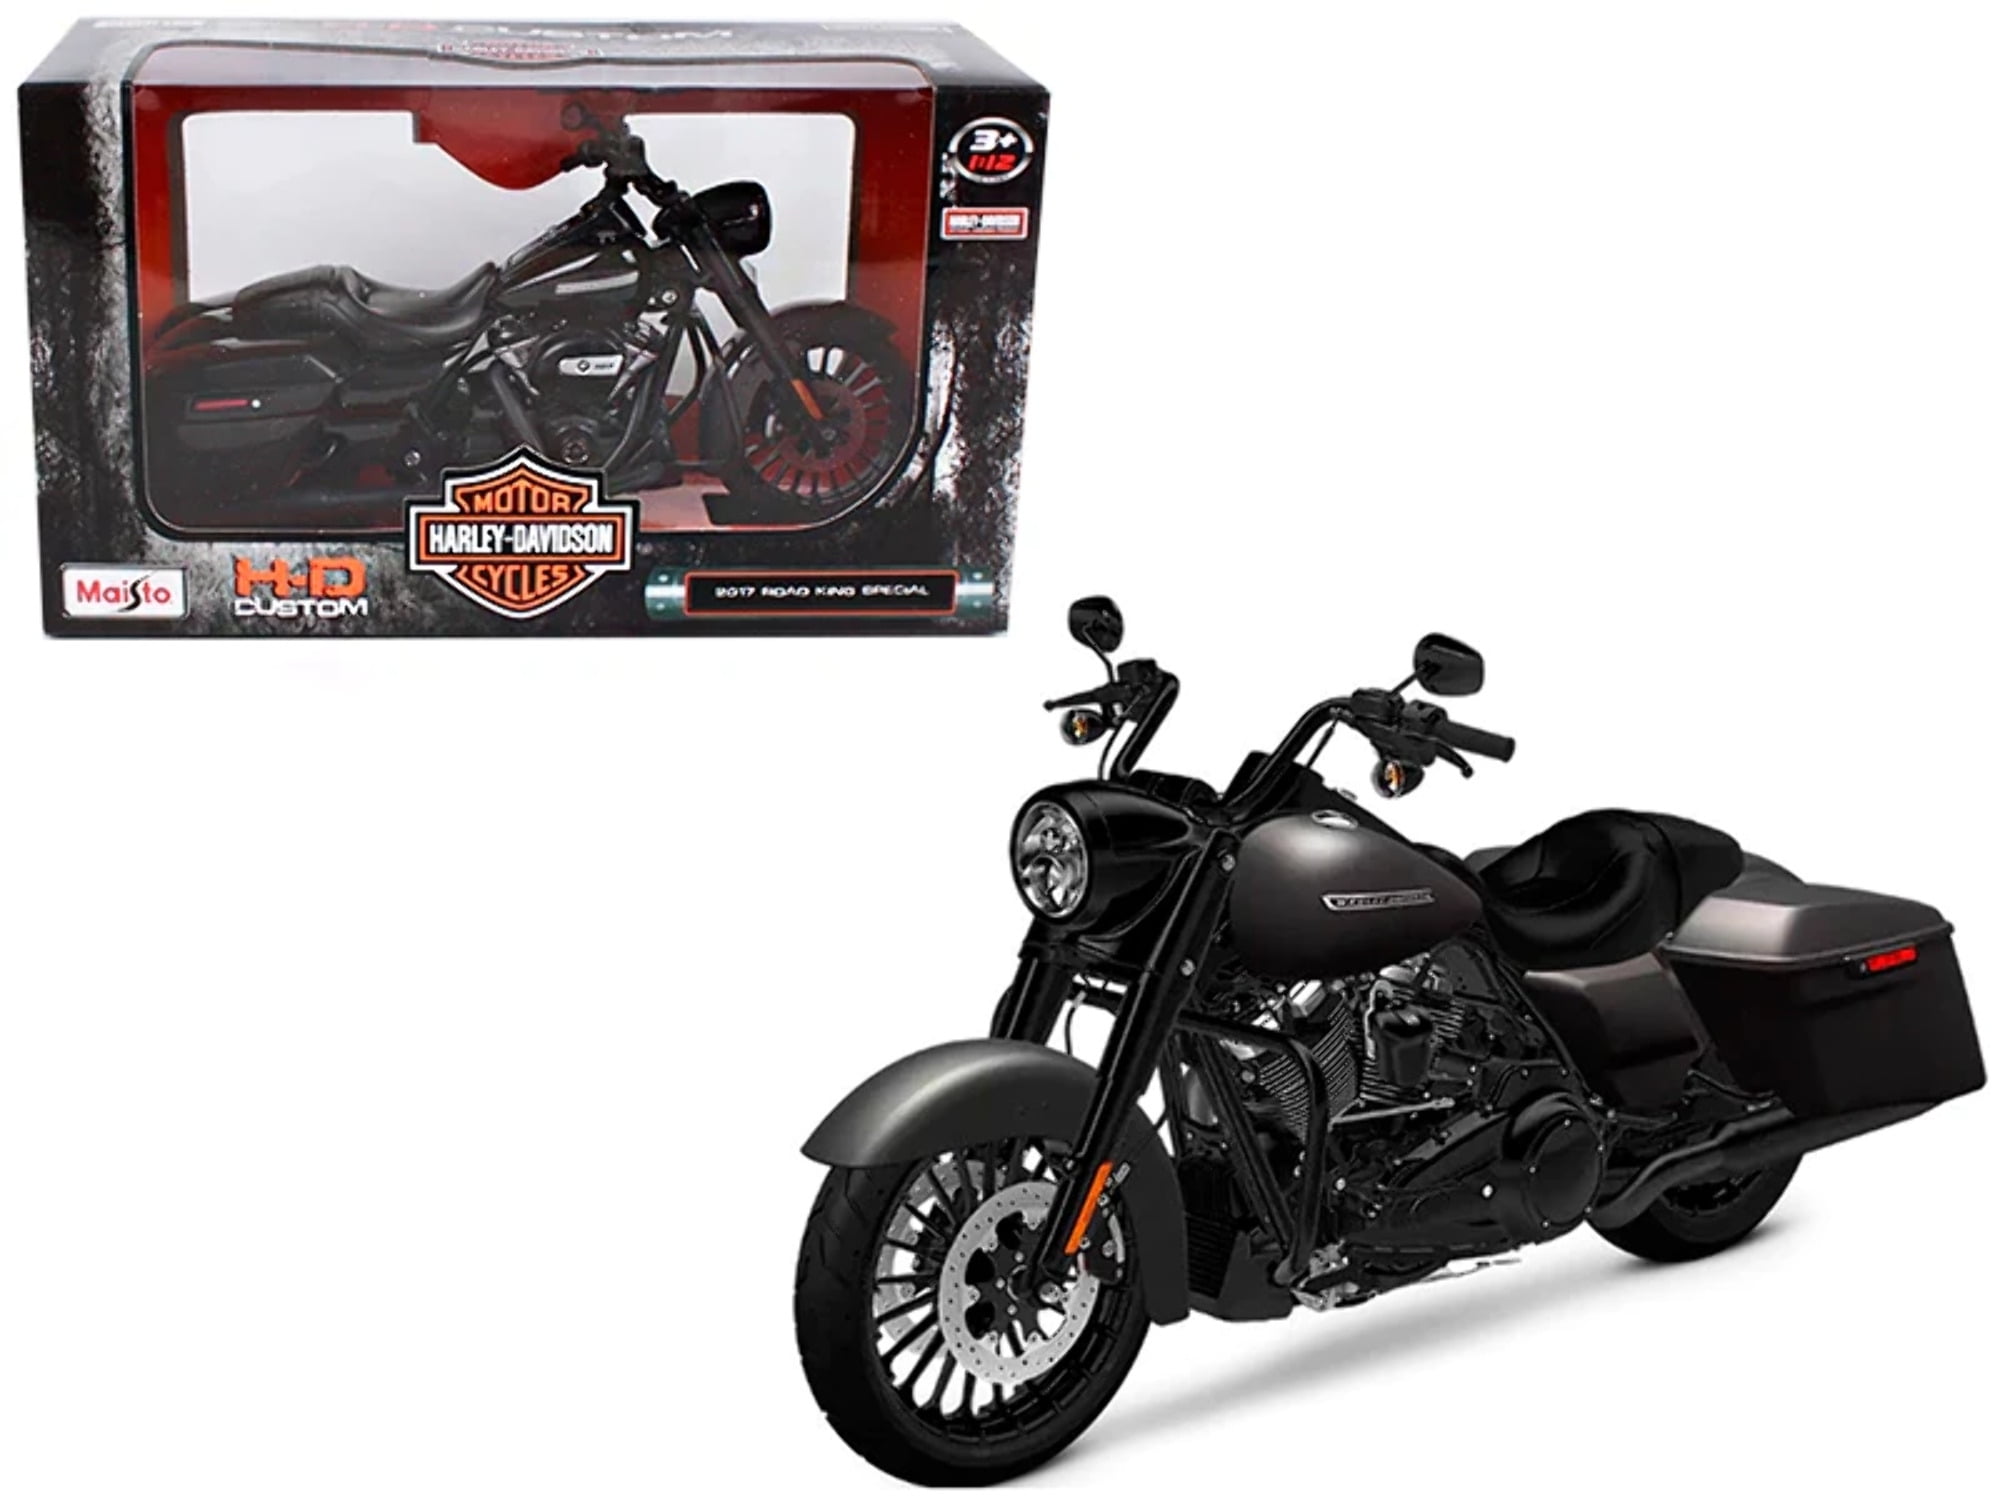 Maisto 32336 1 Isto 12 2017 Harley Davidson King Road Special Motorcycle Model, Black